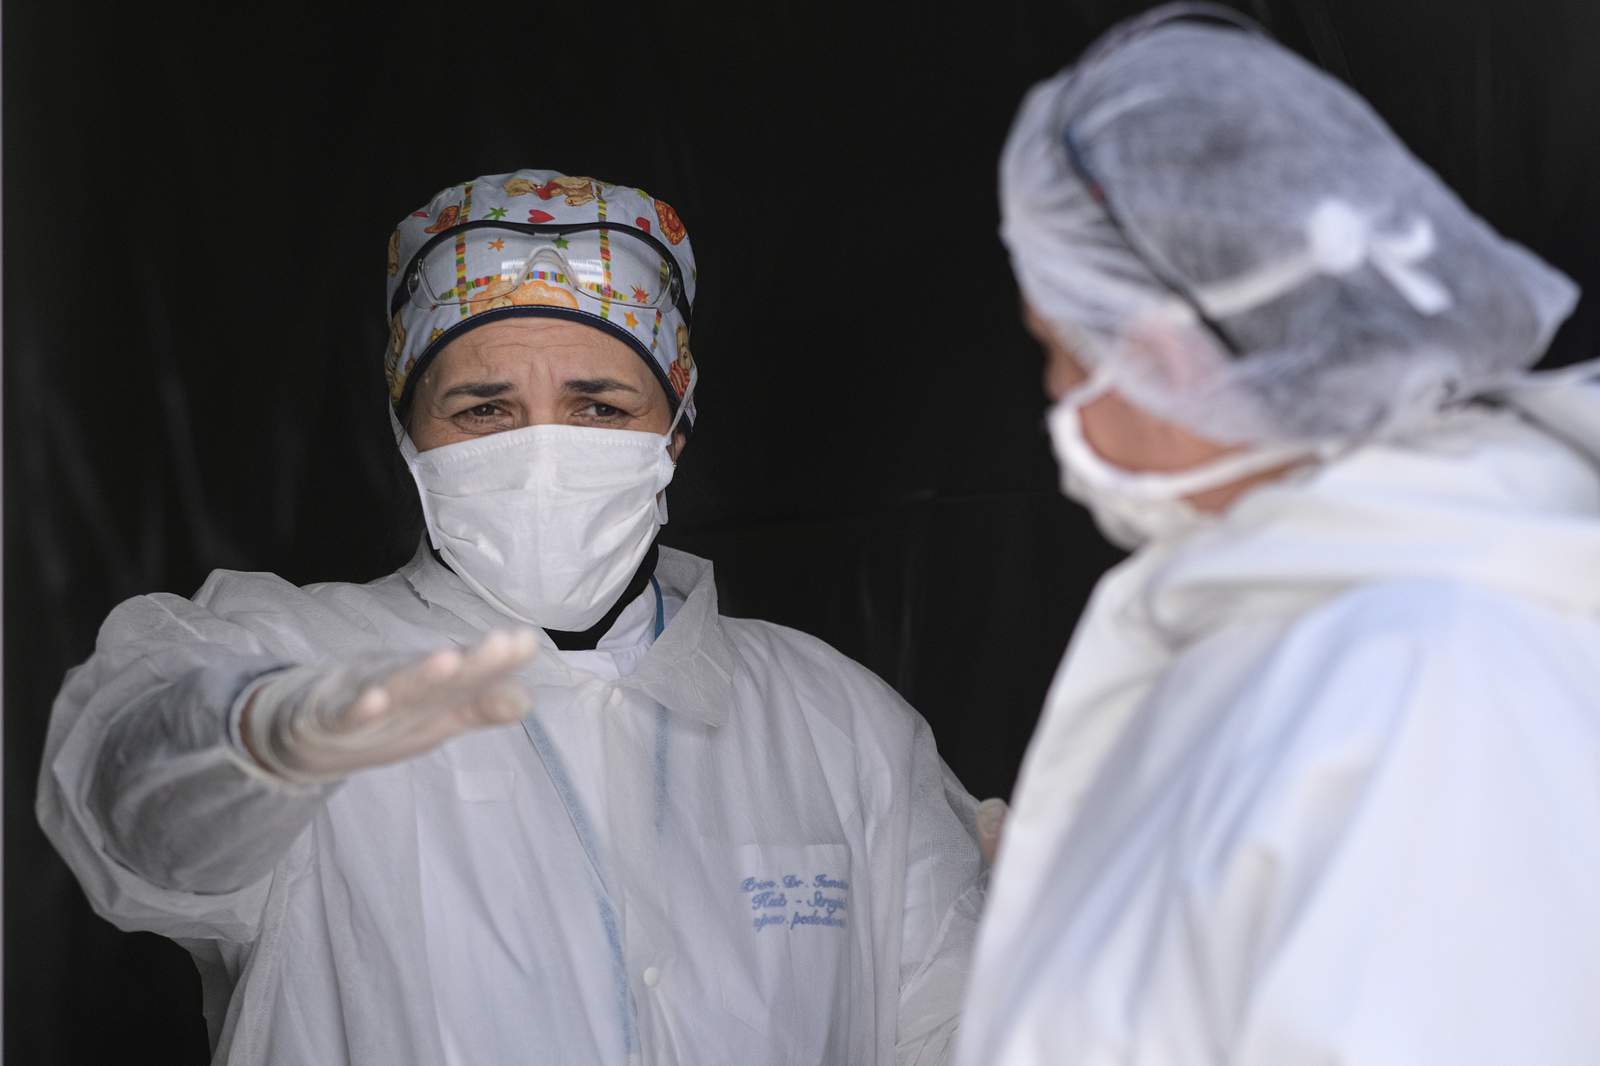 Epidemiologist's COVID-19 death raises concern in Bosnia